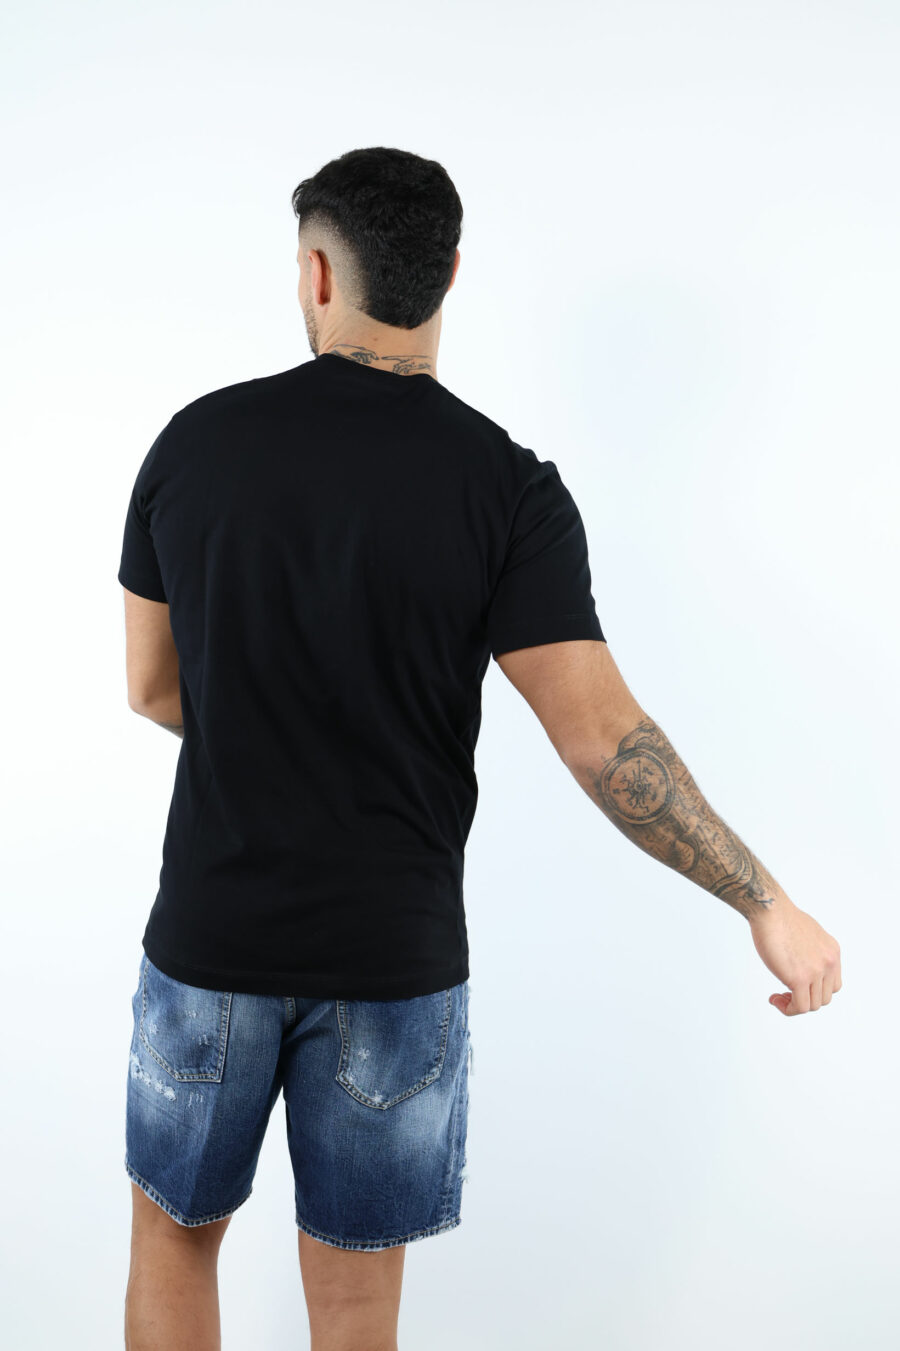 Black T-shirt with maxilogo "ceresio 9 milano" - 106864